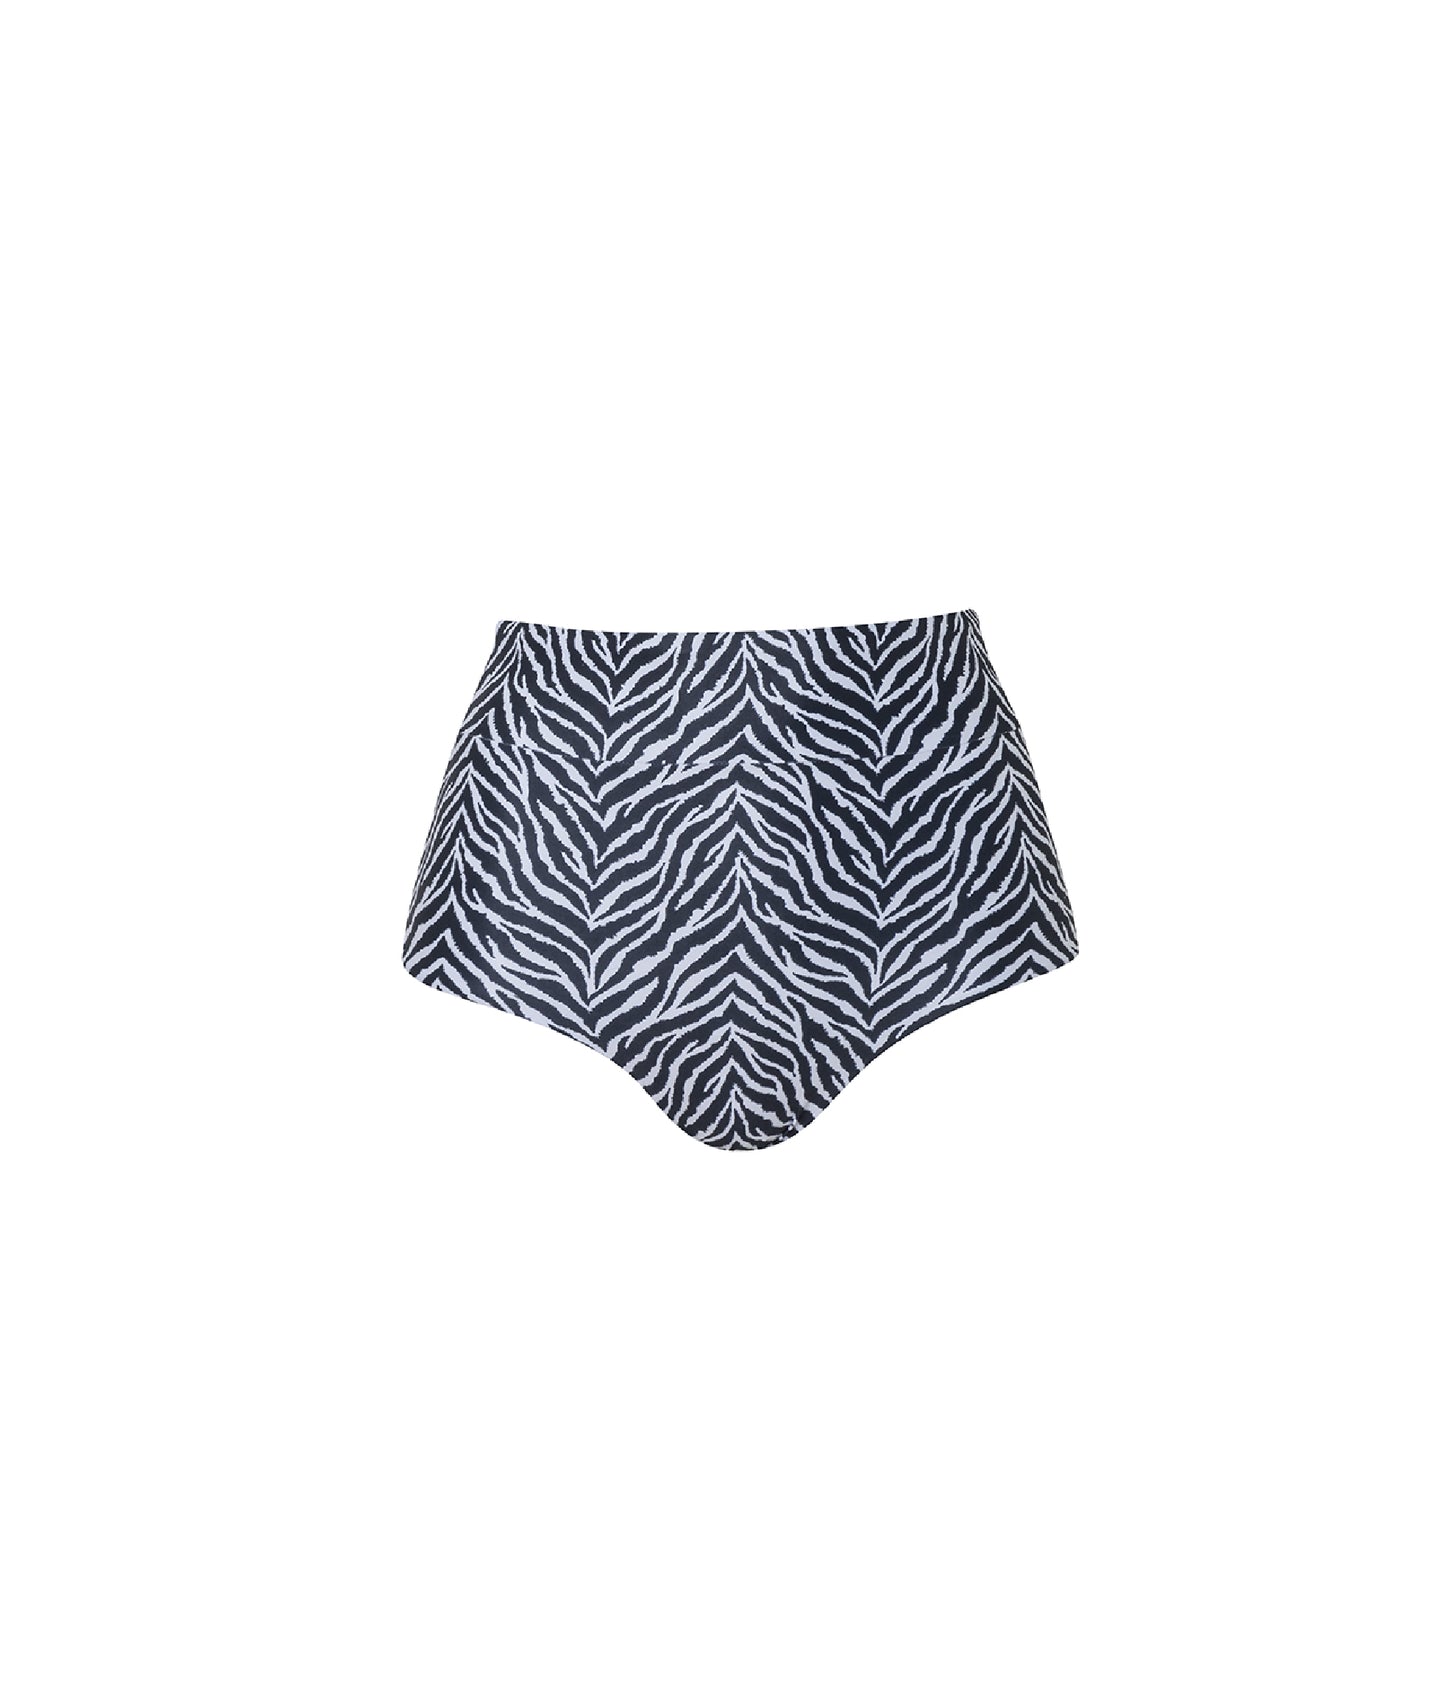 Verdelimon - Bikini Bottom - Valladolid - Printed - Zebra - Front